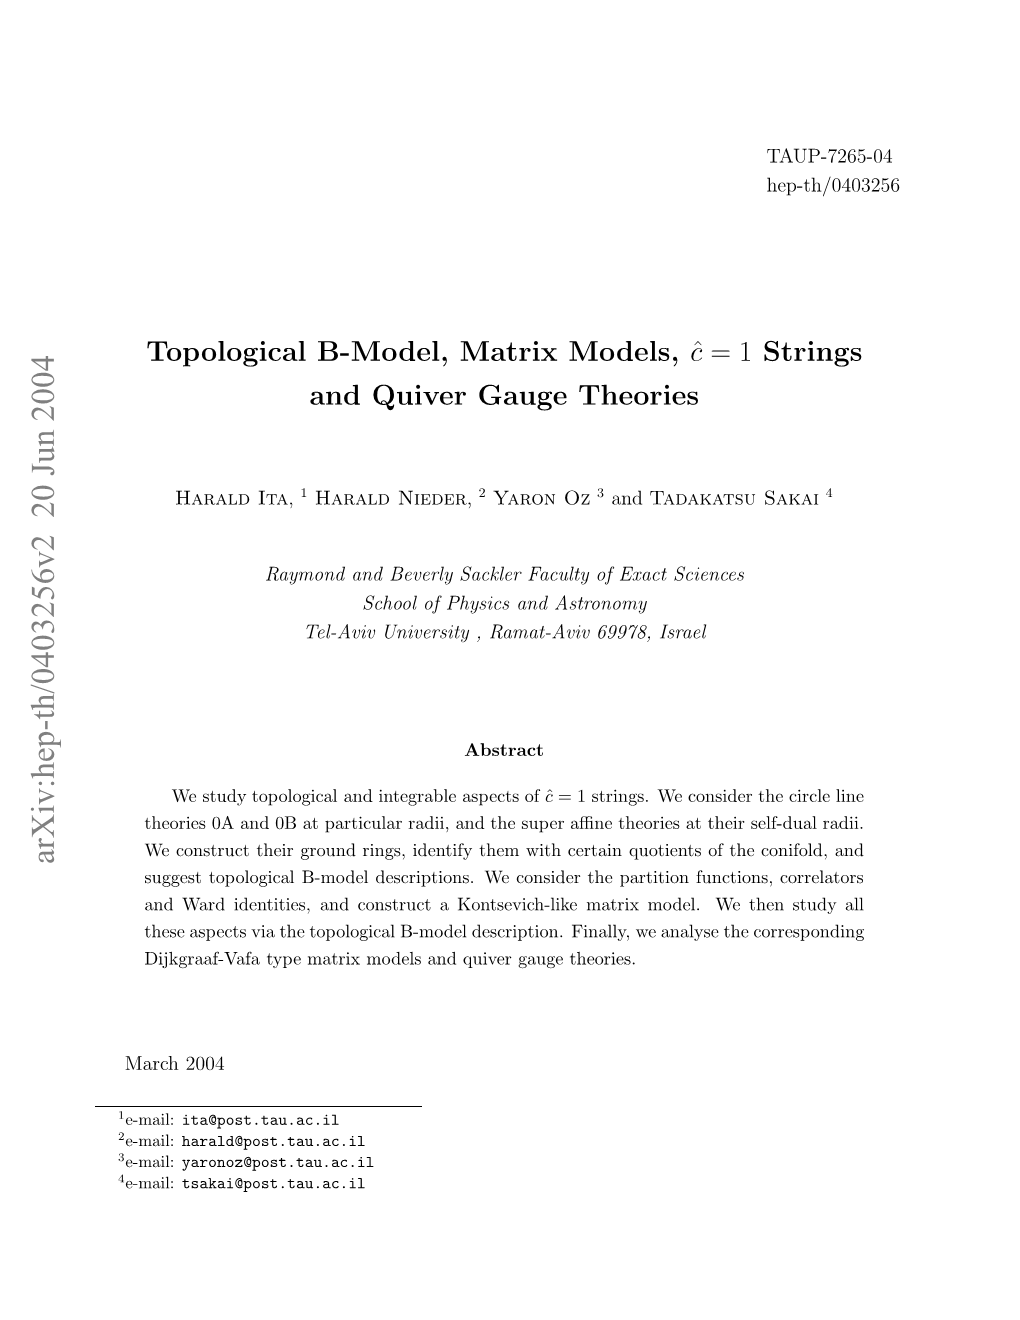 Topological B-Model, Matrix Models, $\Hat {C}= 1$ Strings and Quiver